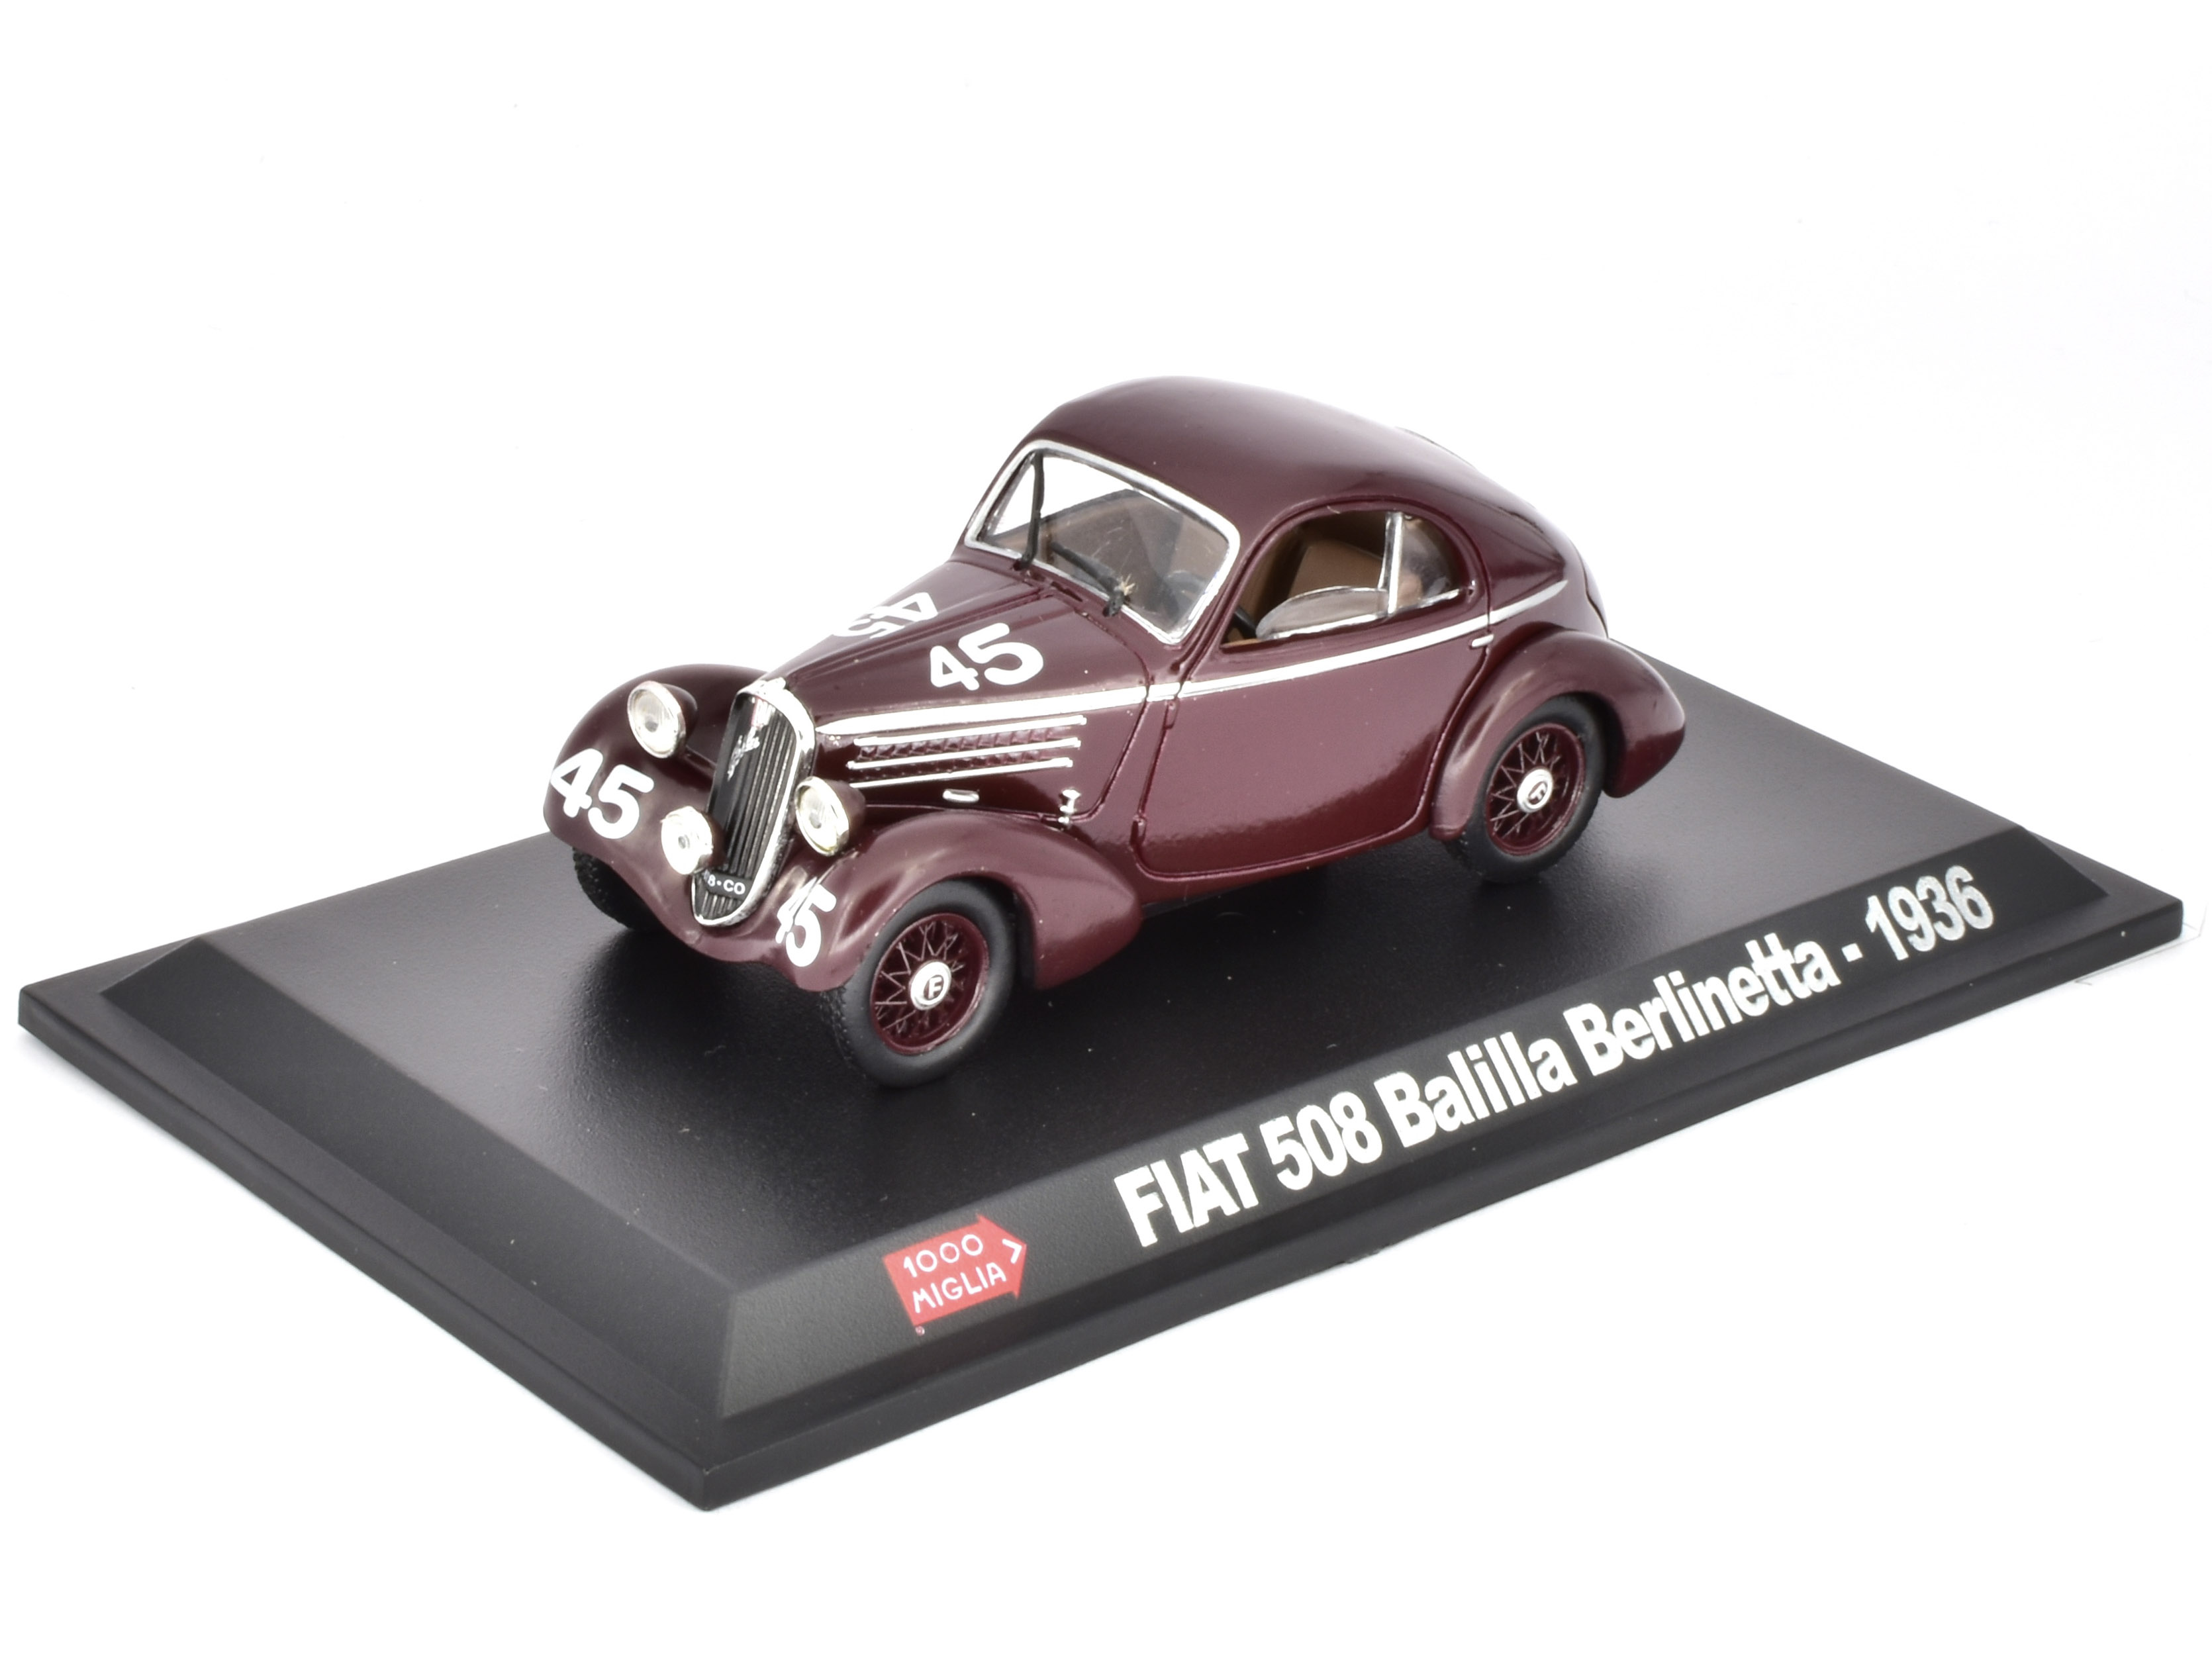 FIAT 508 BALILLA BERLINETTA - 1936